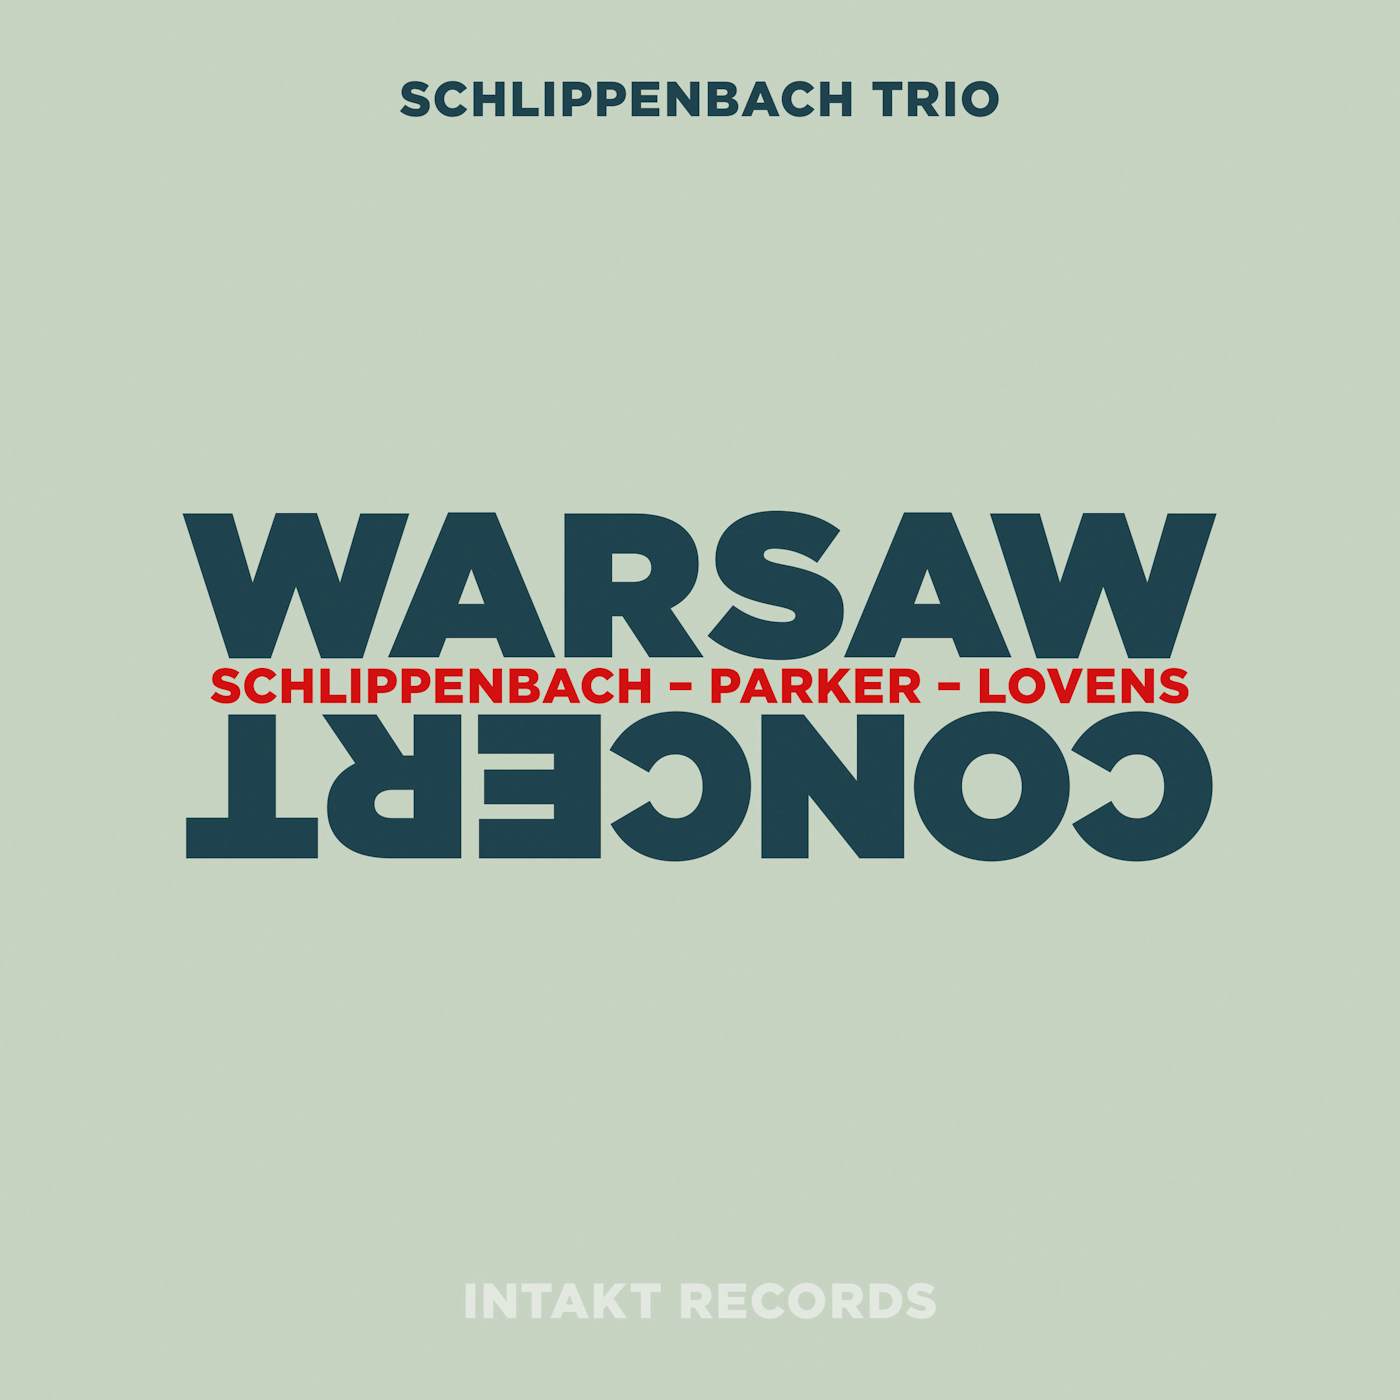 Schlippenbach Trio WARSAW CONCERT CD